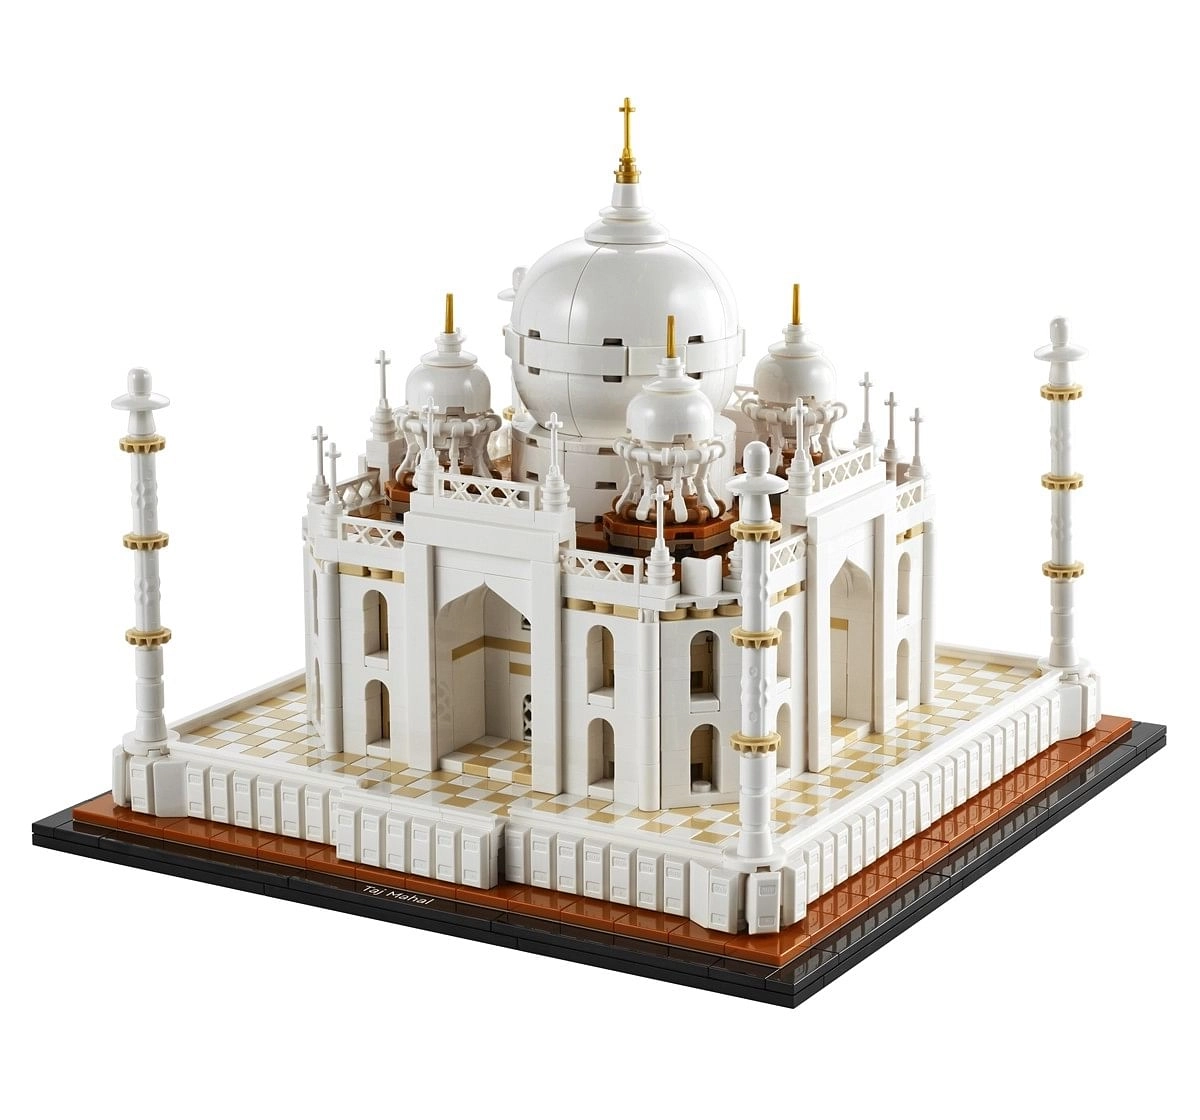 LEGO Architecture Landmarks Collection Taj Mahal 21056 Building Kit (2,022 Pieces)